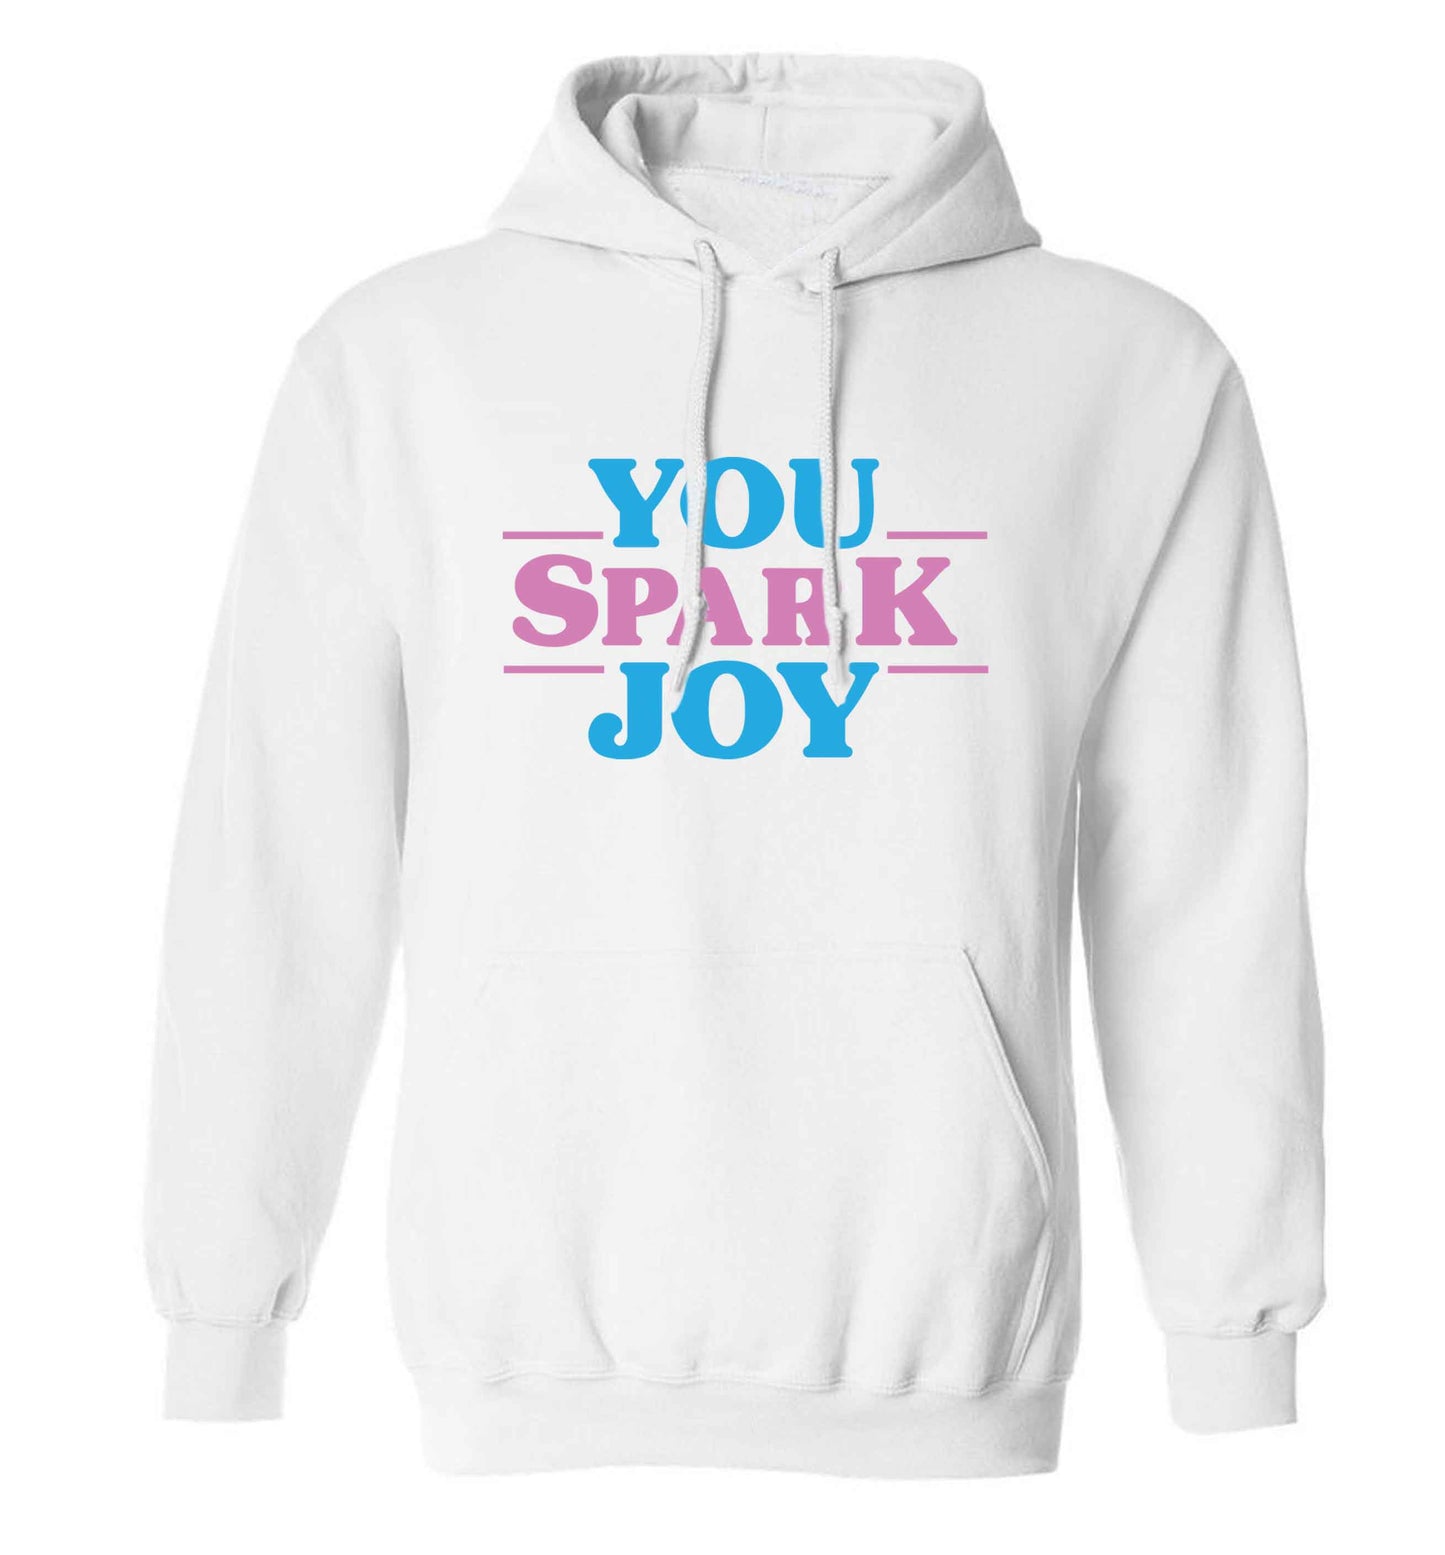 You spark joy adults unisex white hoodie 2XL